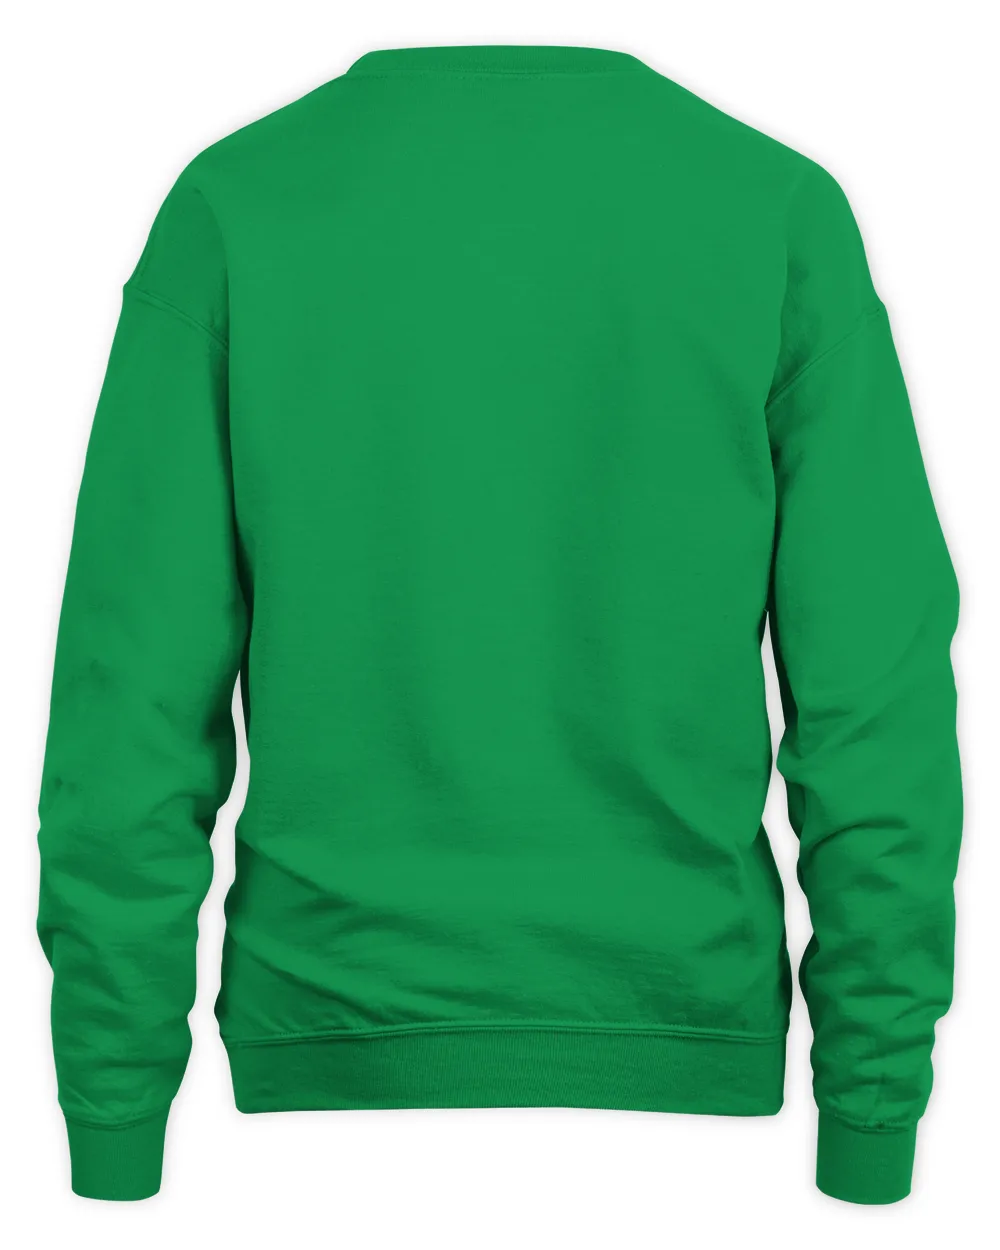 Plus Size Graphic Print Sweatshirt, Casual Long Sleeve Round Neck Sweatshirt